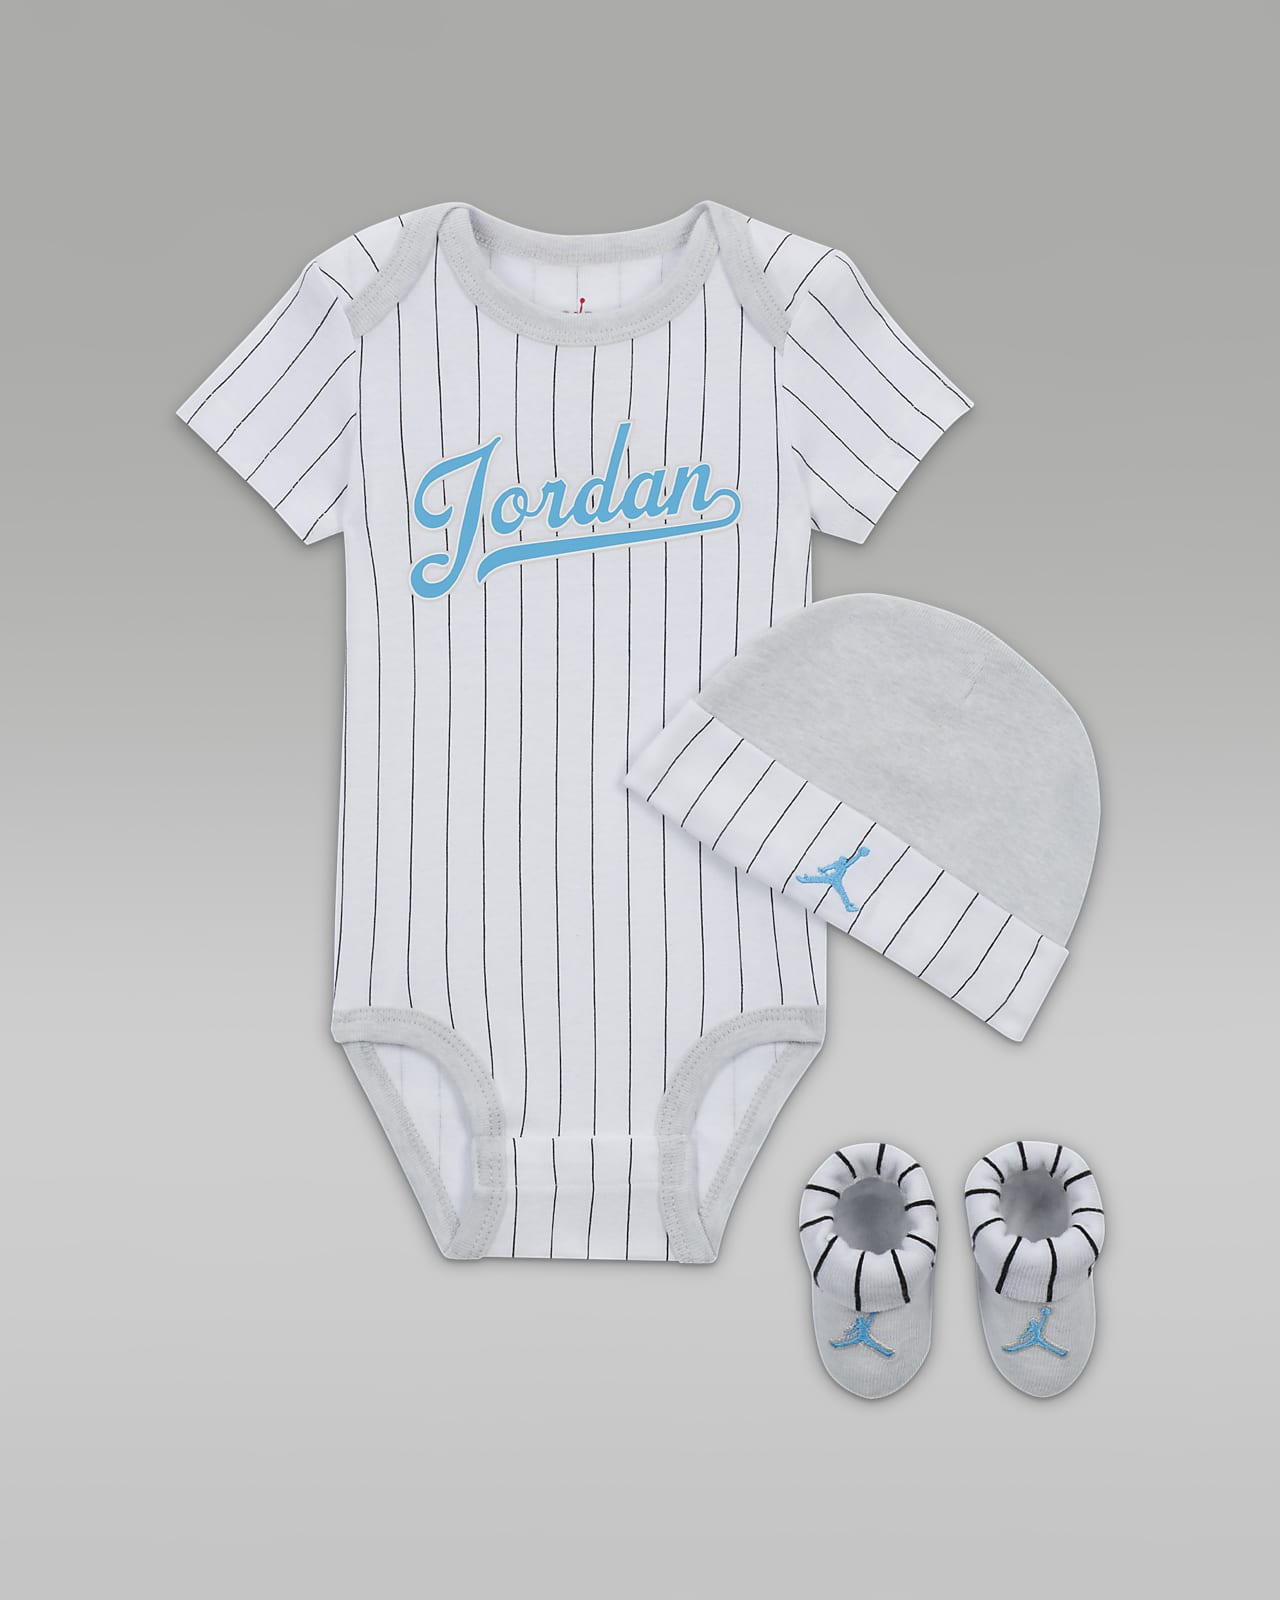 Jordan MVP 婴童连体衣、针织帽和学步袜套装